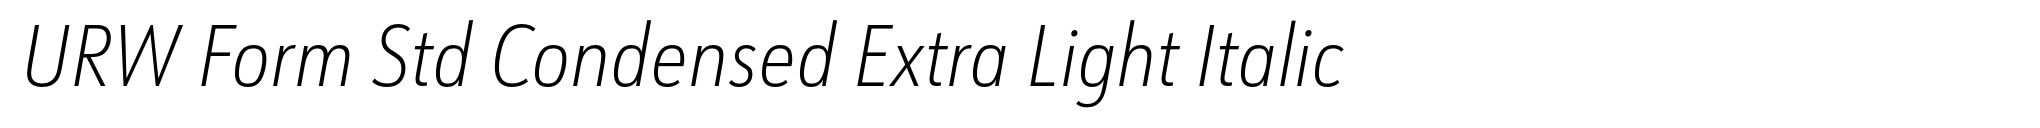 URW Form Std Condensed Extra Light Italic image